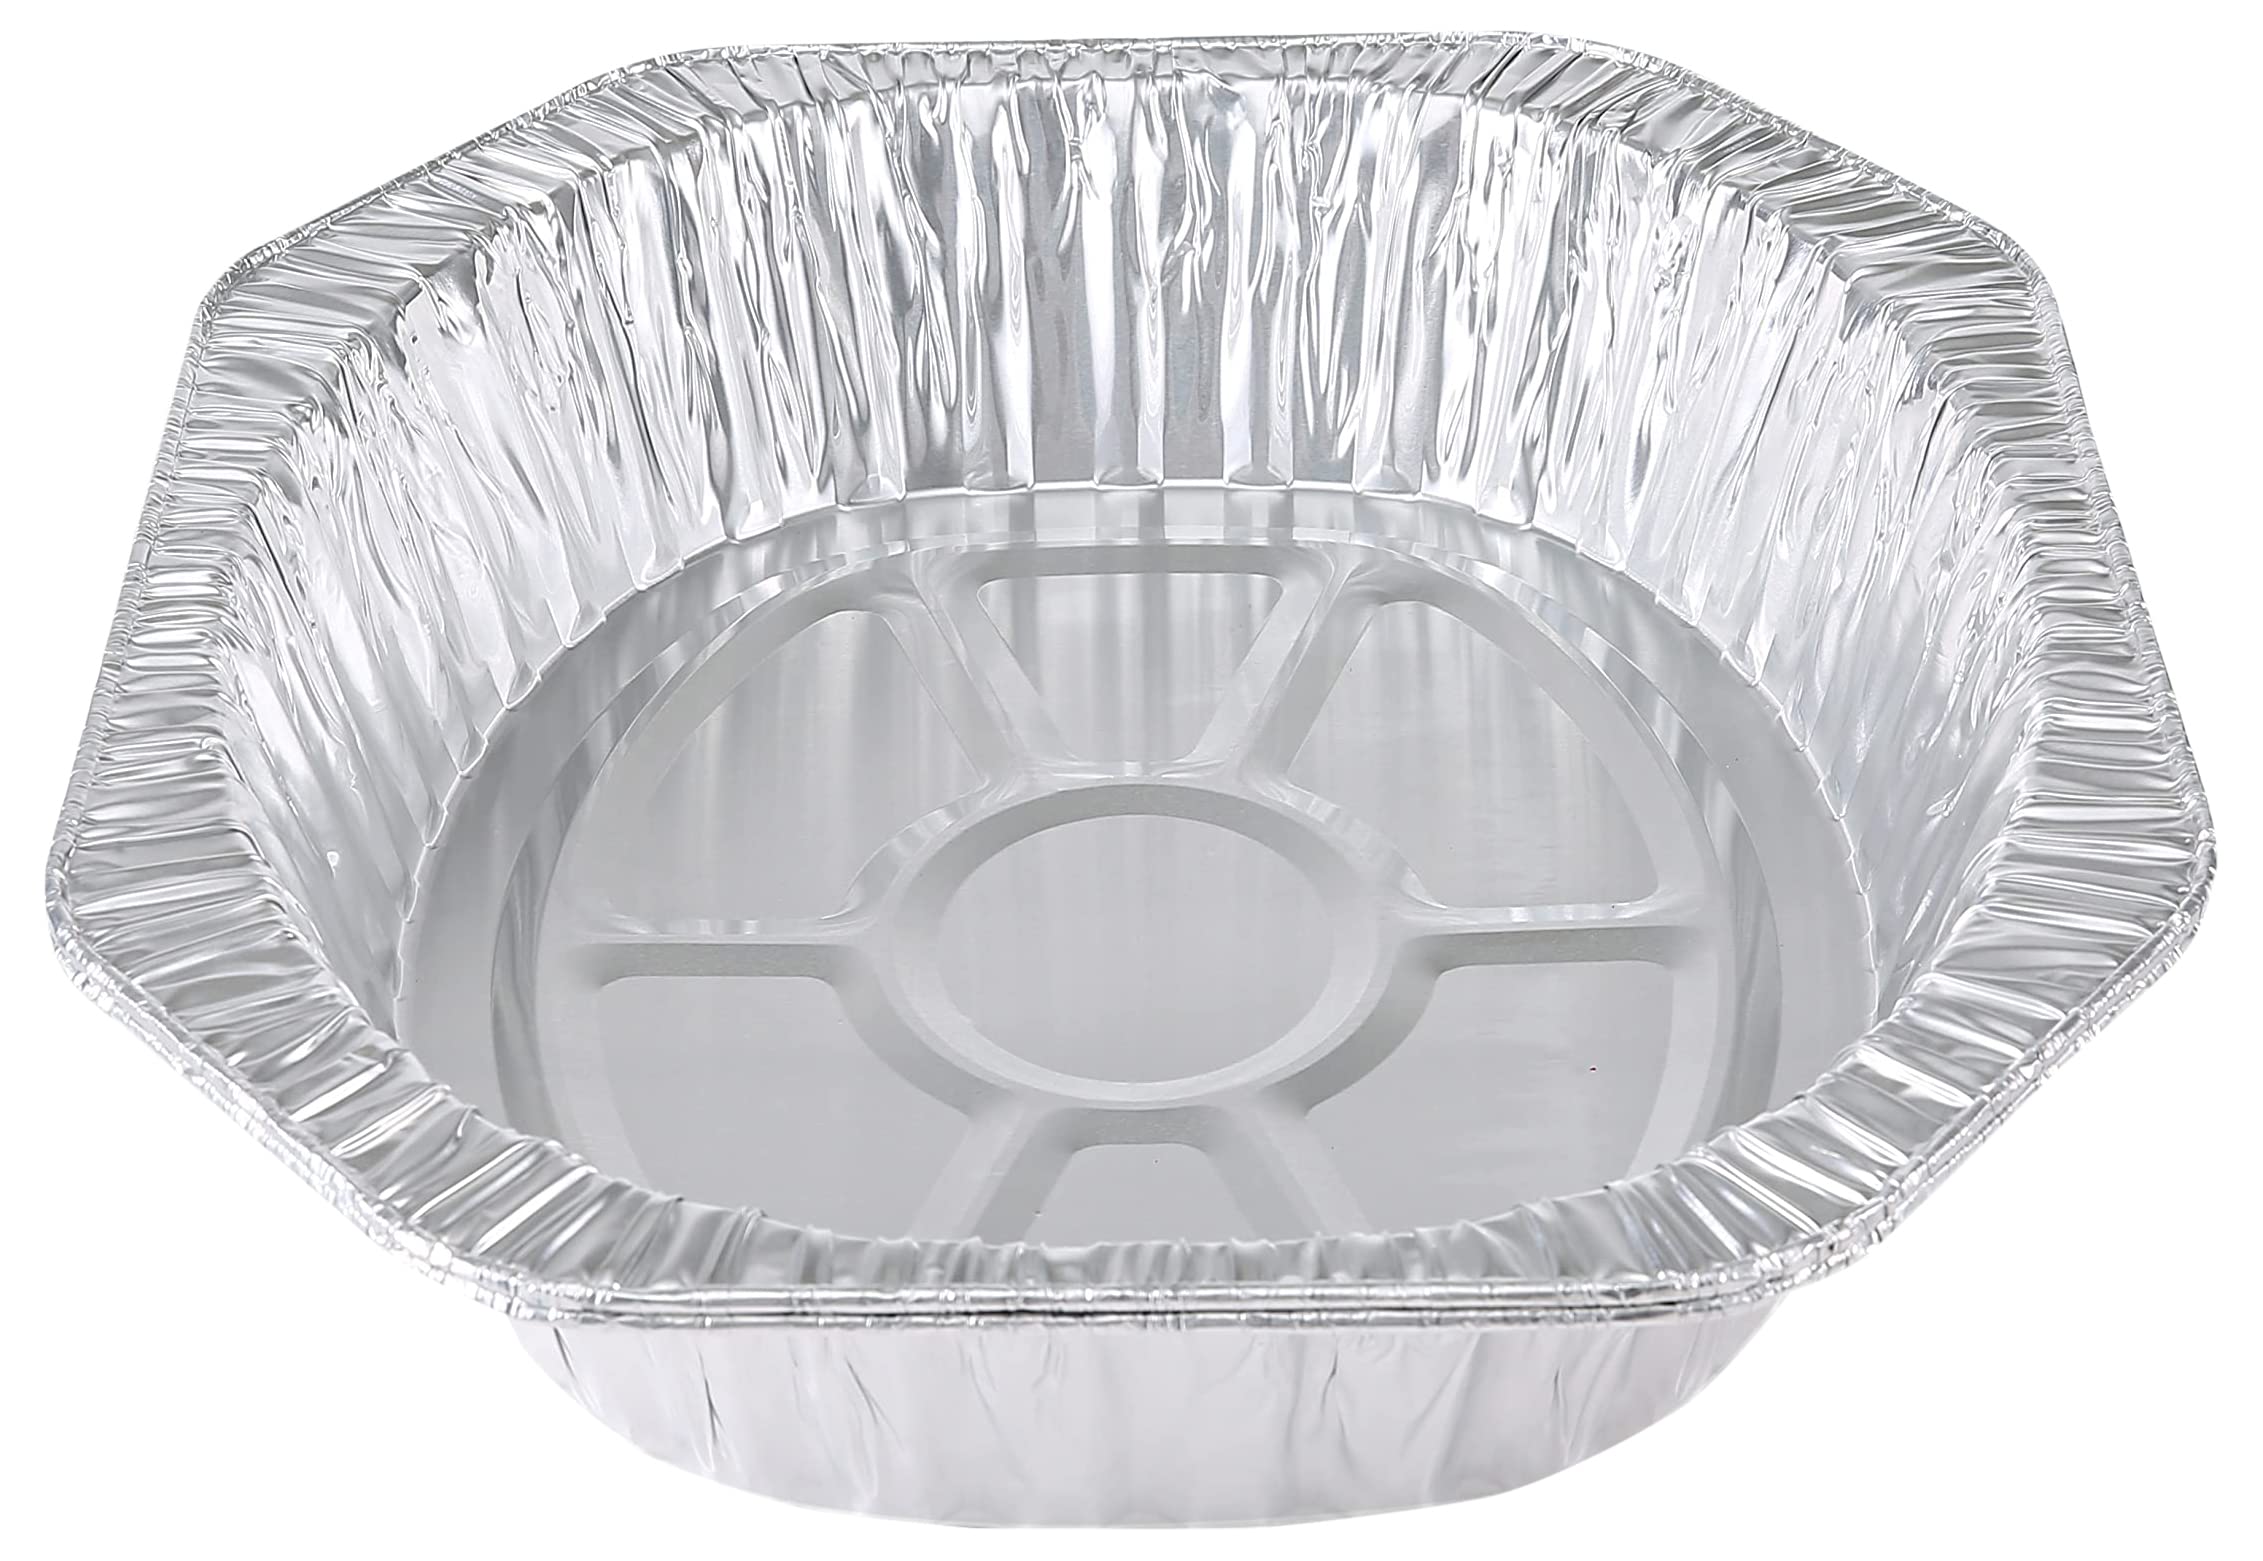 Glad Oval Roaster Pans, 2ct | 2 Count Foil Roasting Pans | Foil Baking Pan Disposable | Oval Aluminum Pan for Baking, Roasting, Reheating | Heavy Duty Disposable Roasting Pans